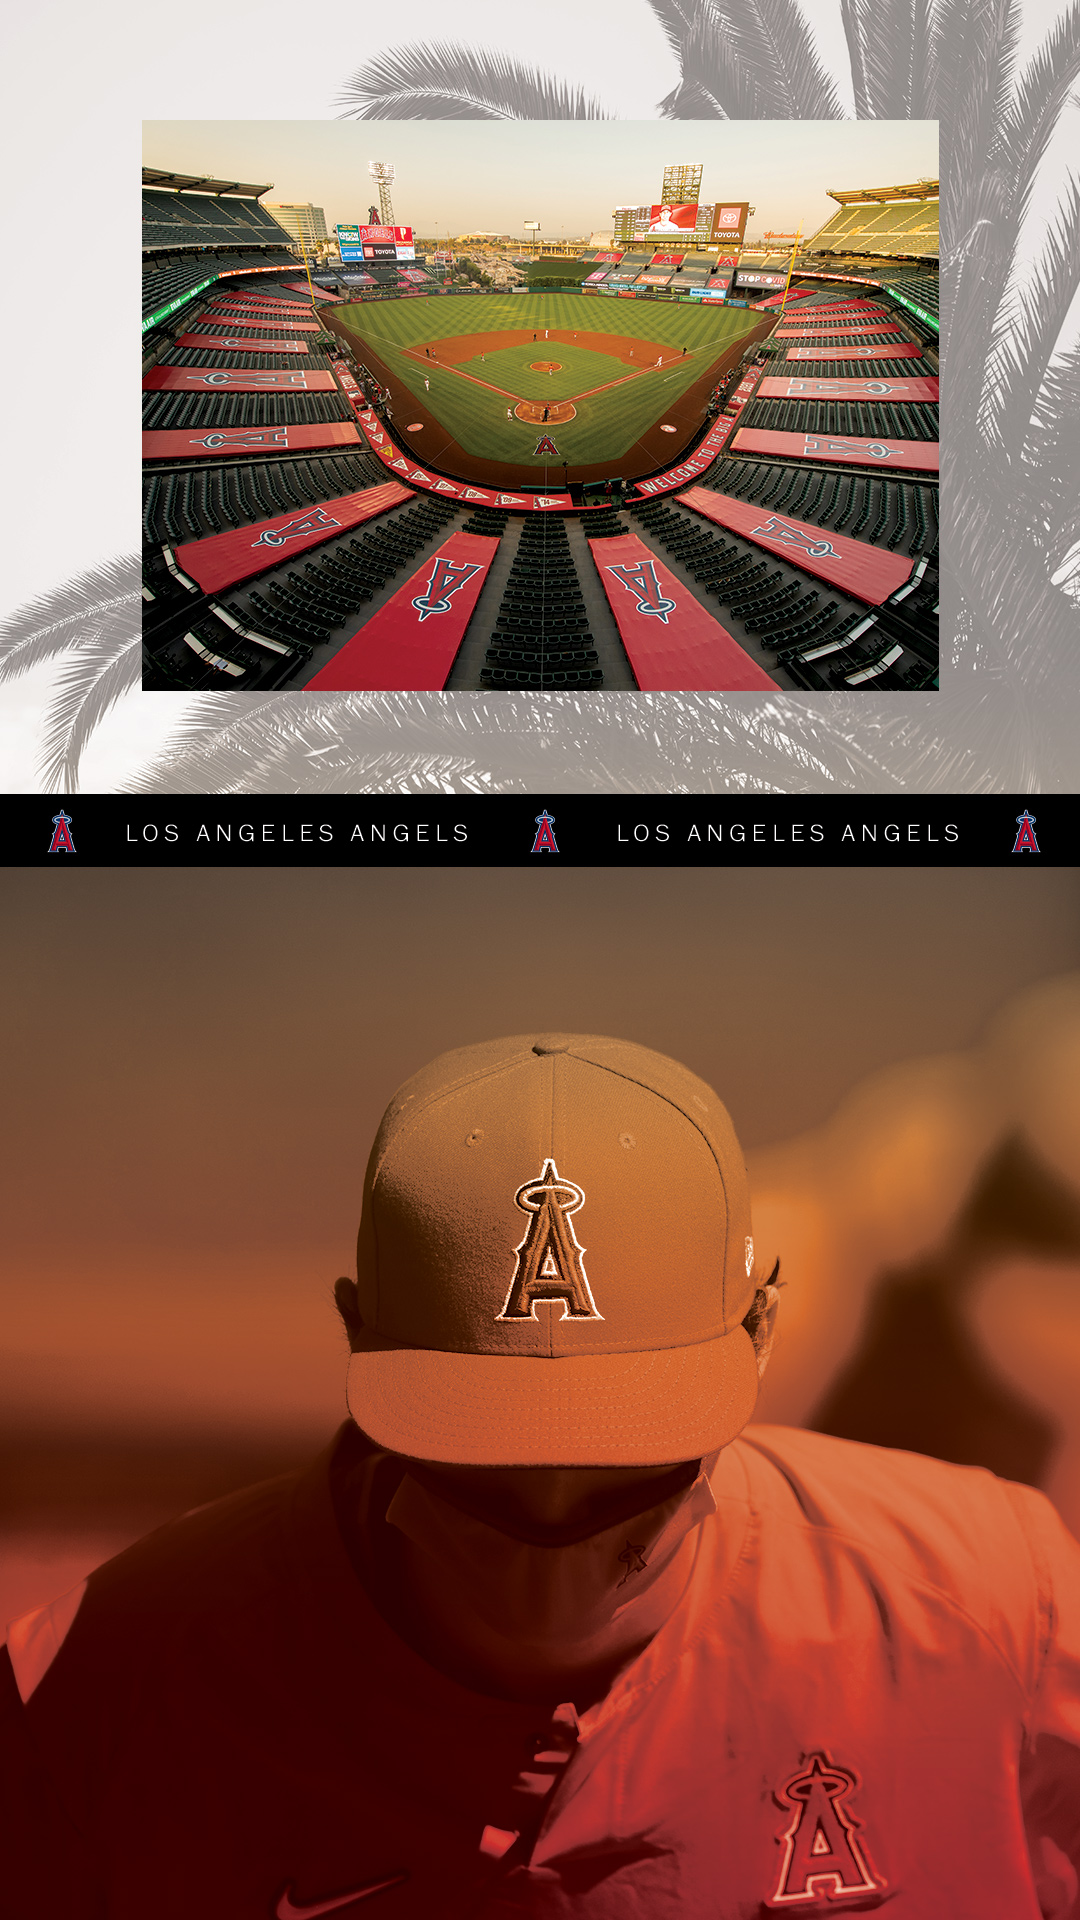 50+] Los Angeles Angels iPhone Wallpaper - WallpaperSafari